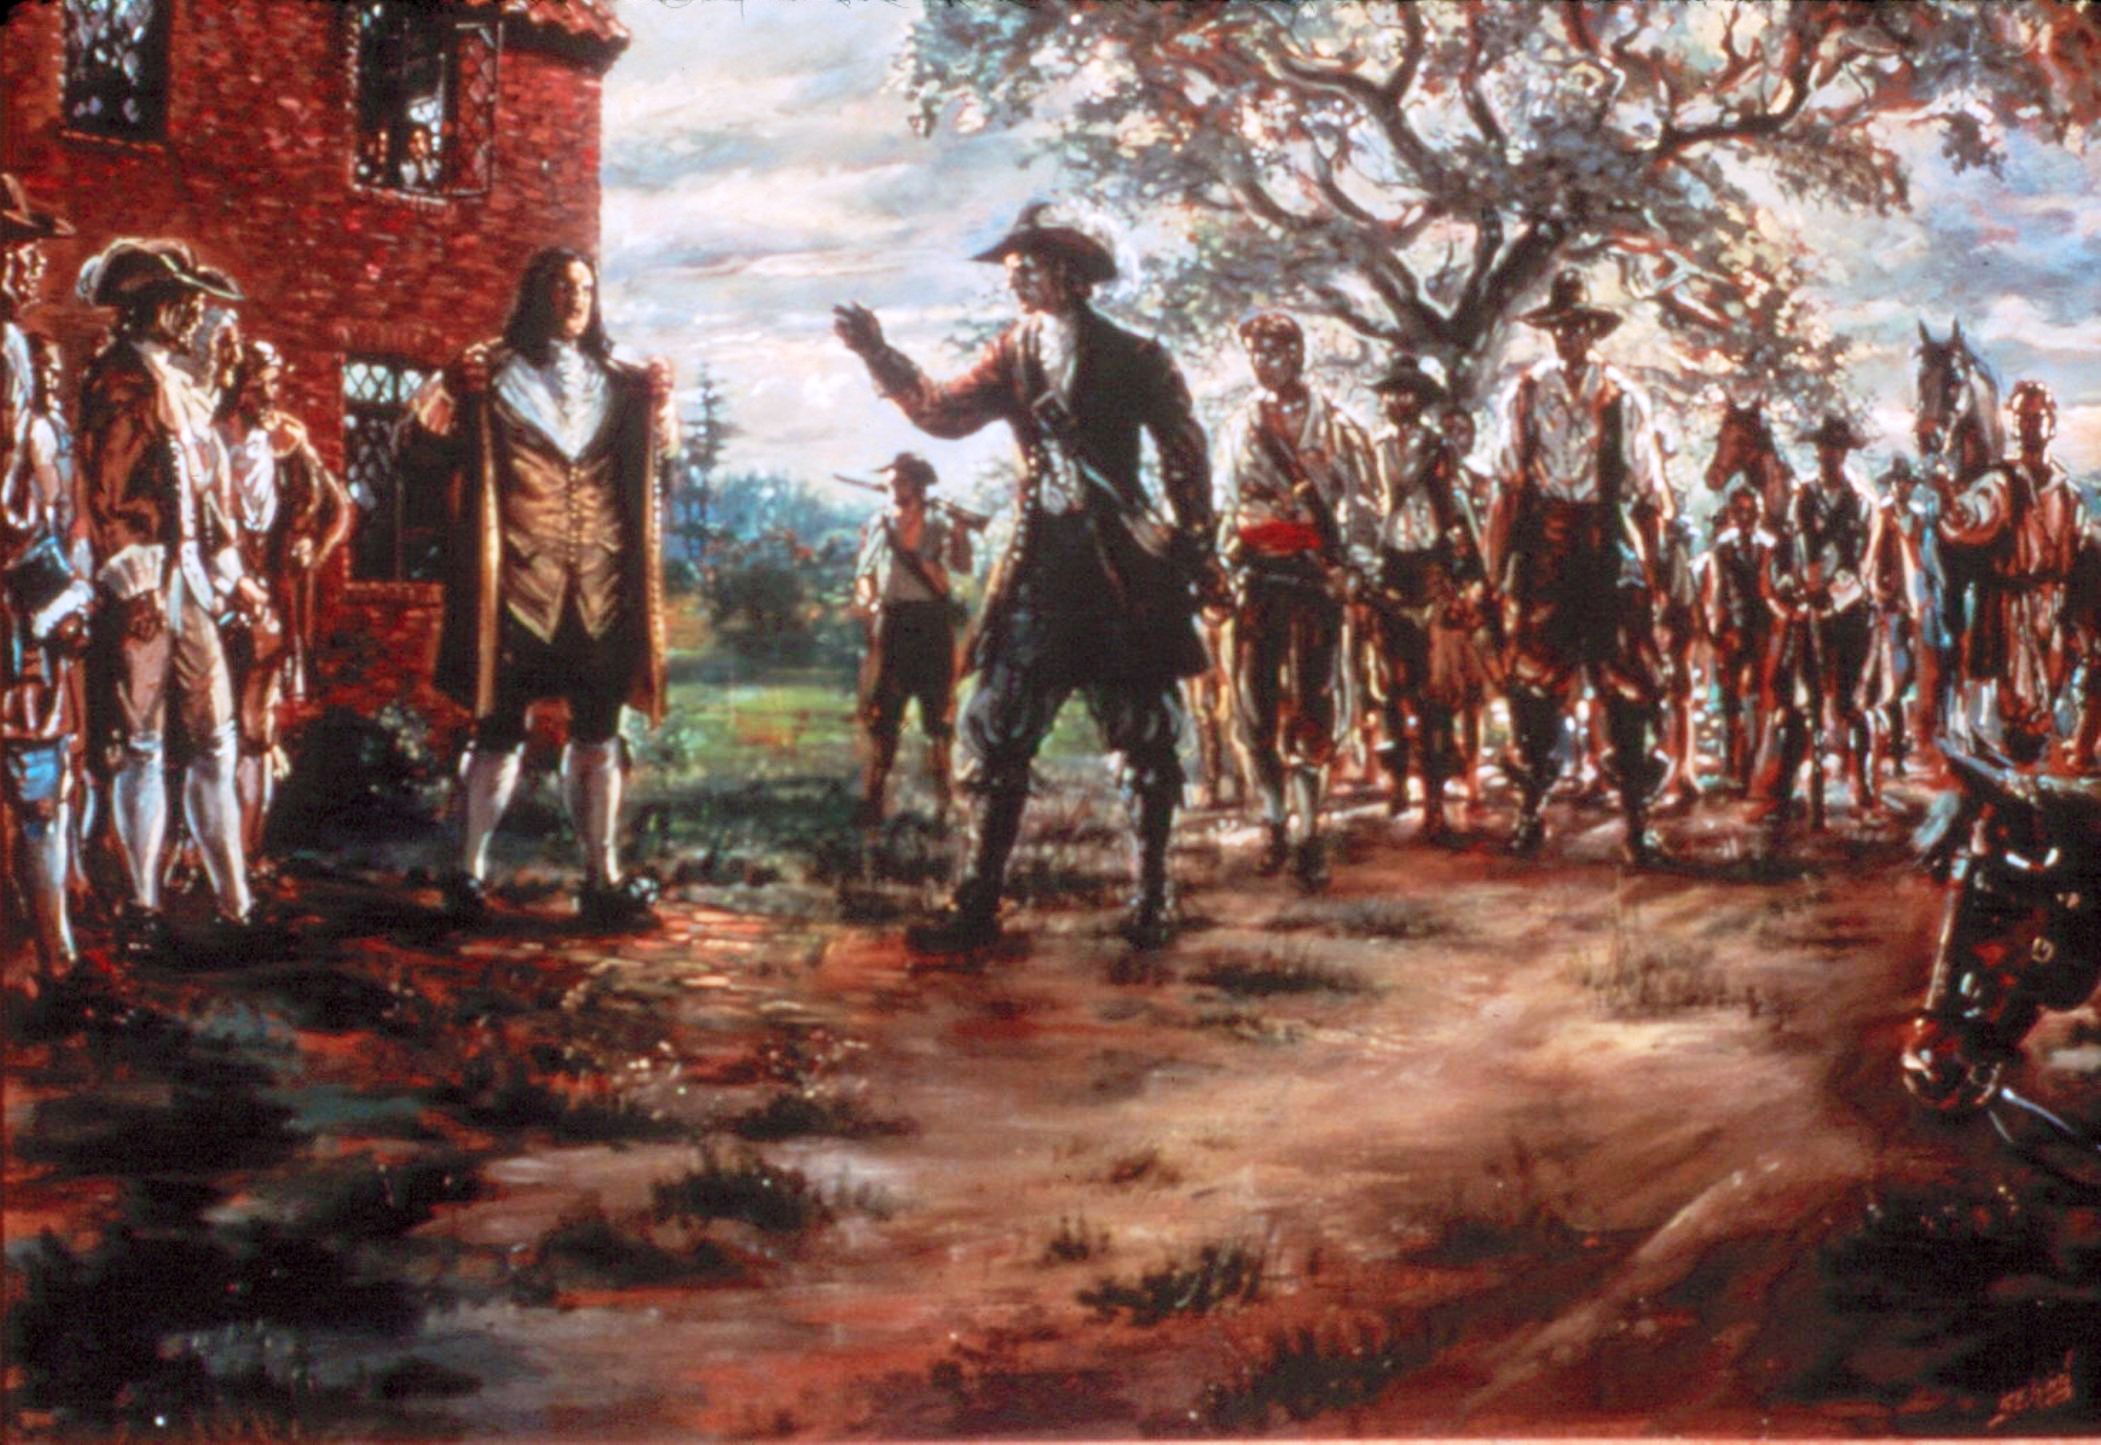 Bacon's Rebellion in 1676